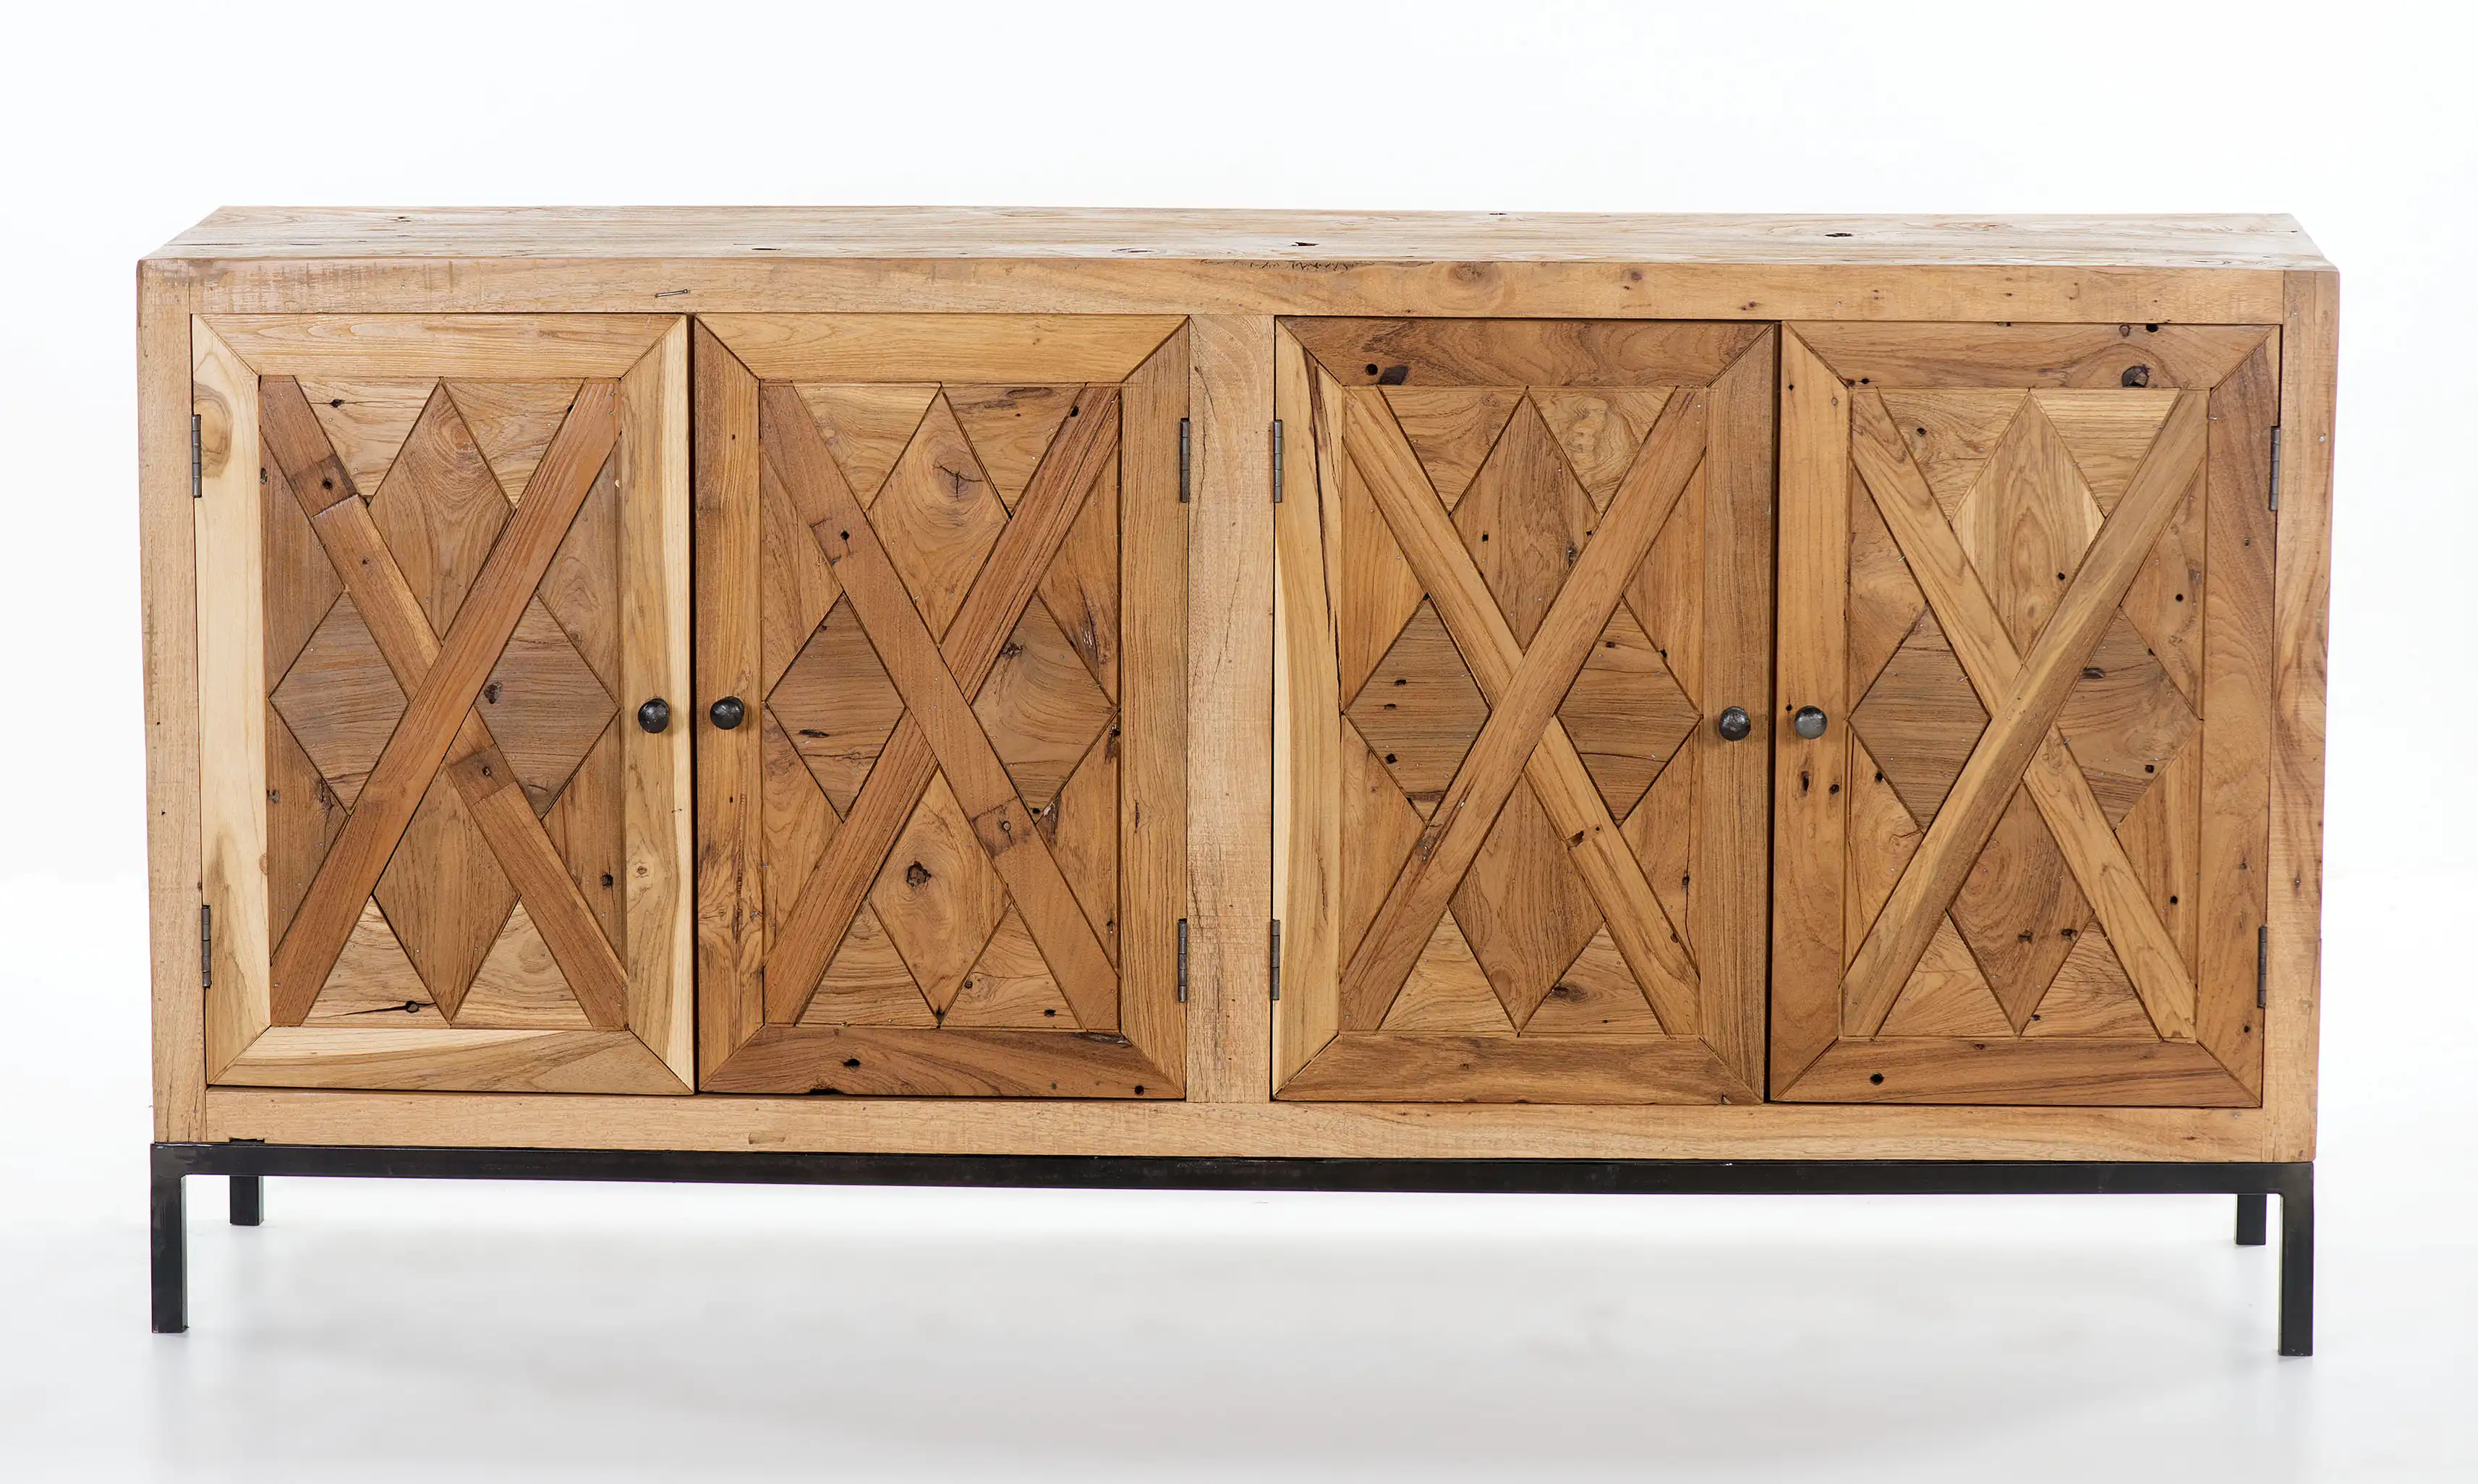 Parket Collection's Wooden Sideboard / Buffet with 4 Doors - popular handicrafts